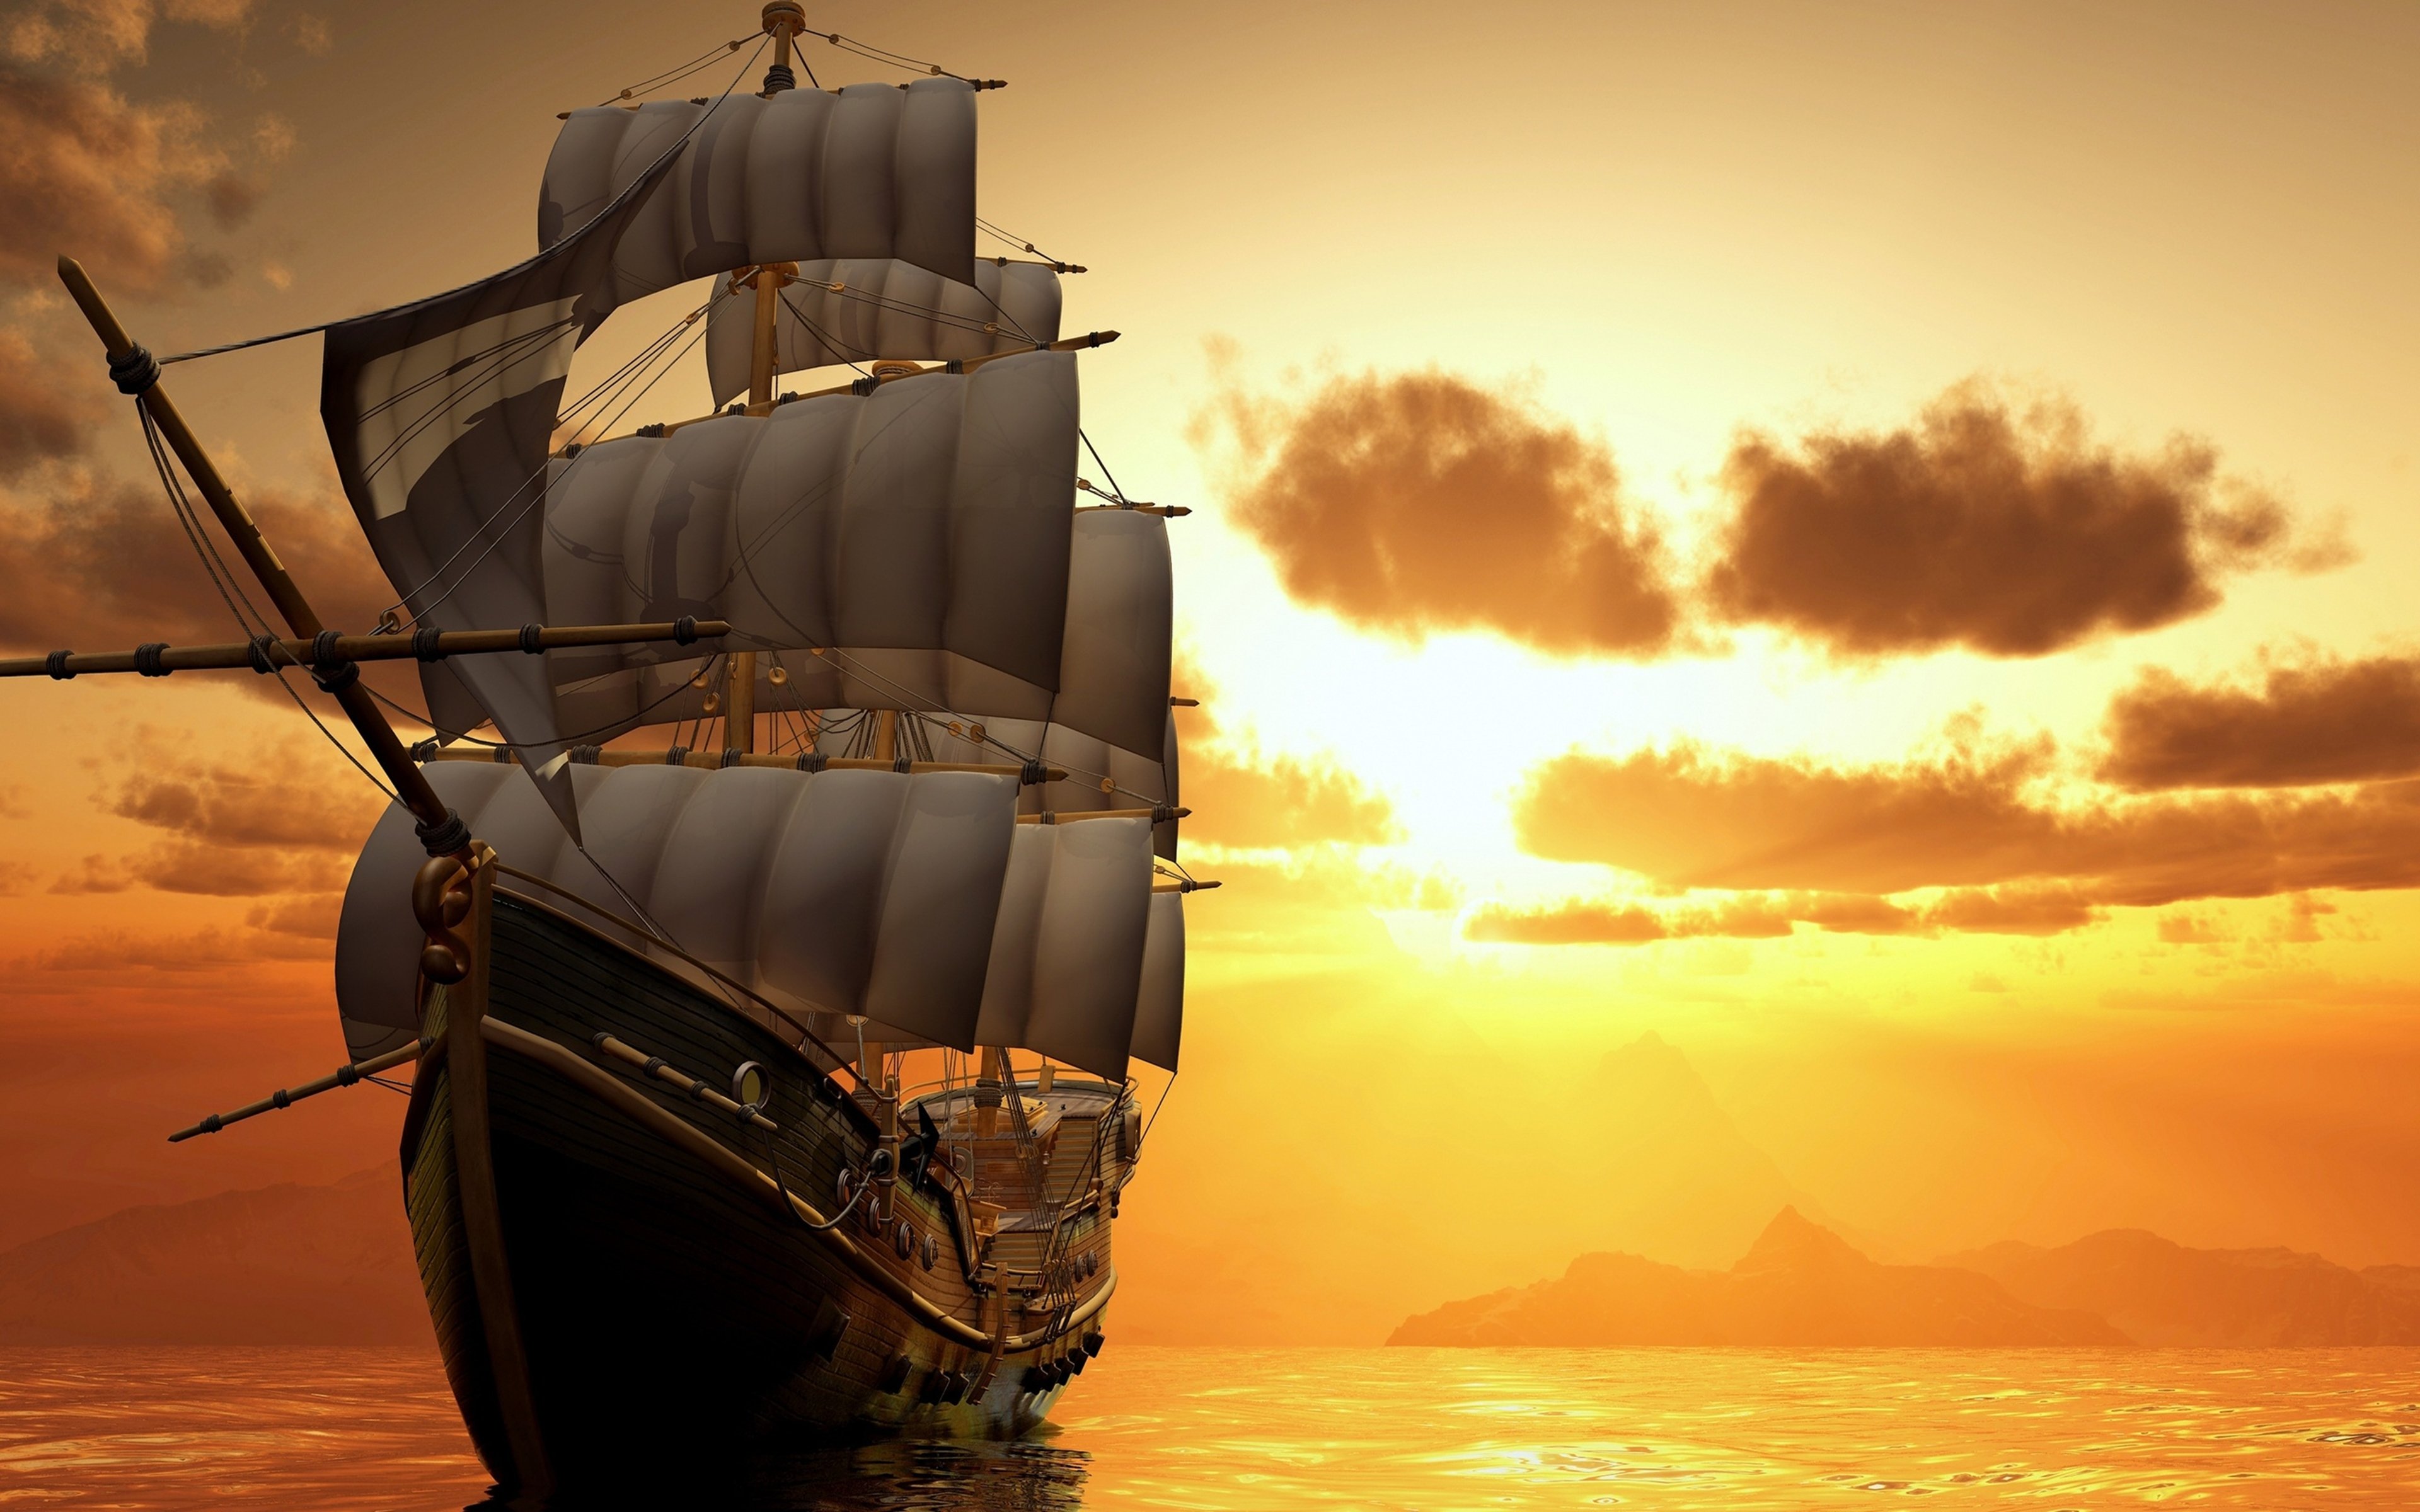 Ship watercrafts sea ocean boats sky clouds sailing sunset sunrise